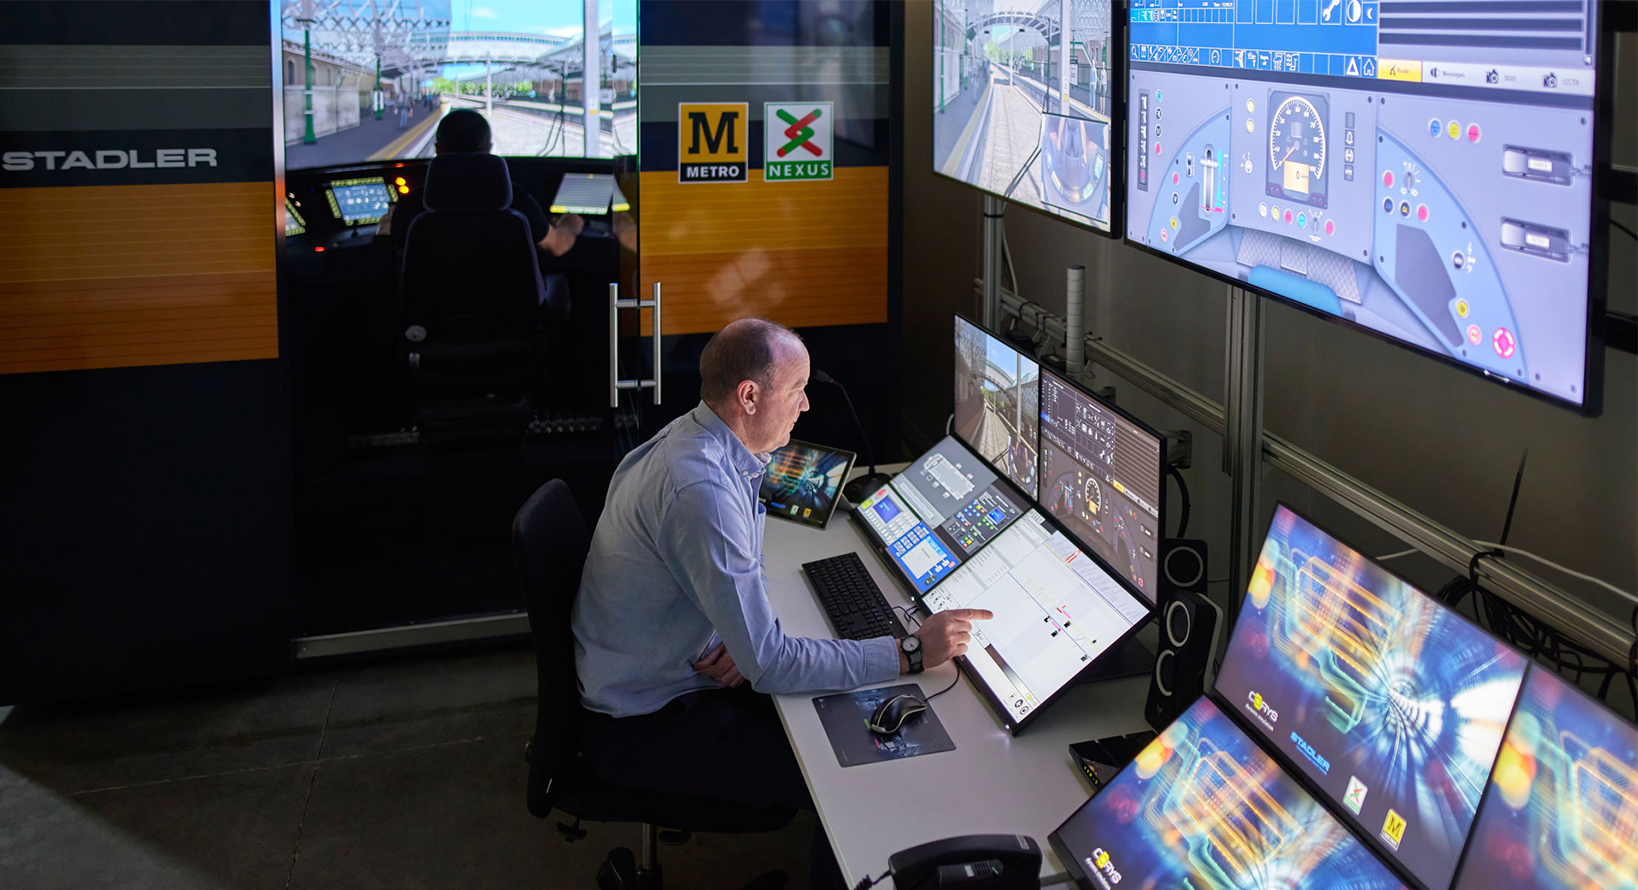 nexus’ new metro fleet driving simulator commissioned